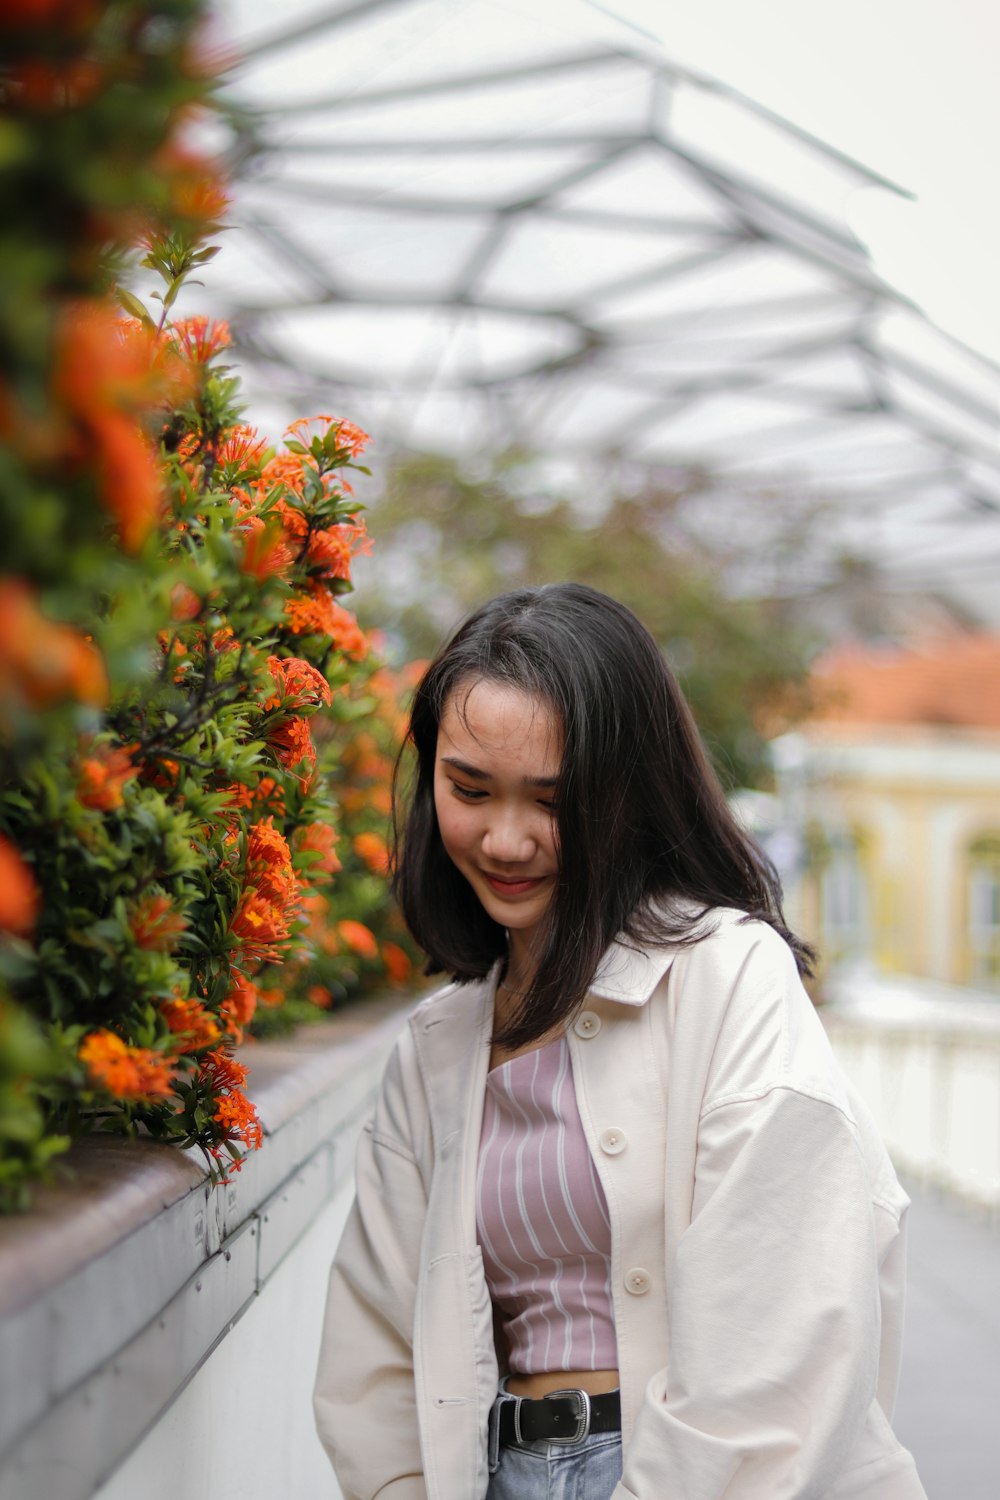 Mujer con camisa blanca de manga larga de pie junto a flores naranjas